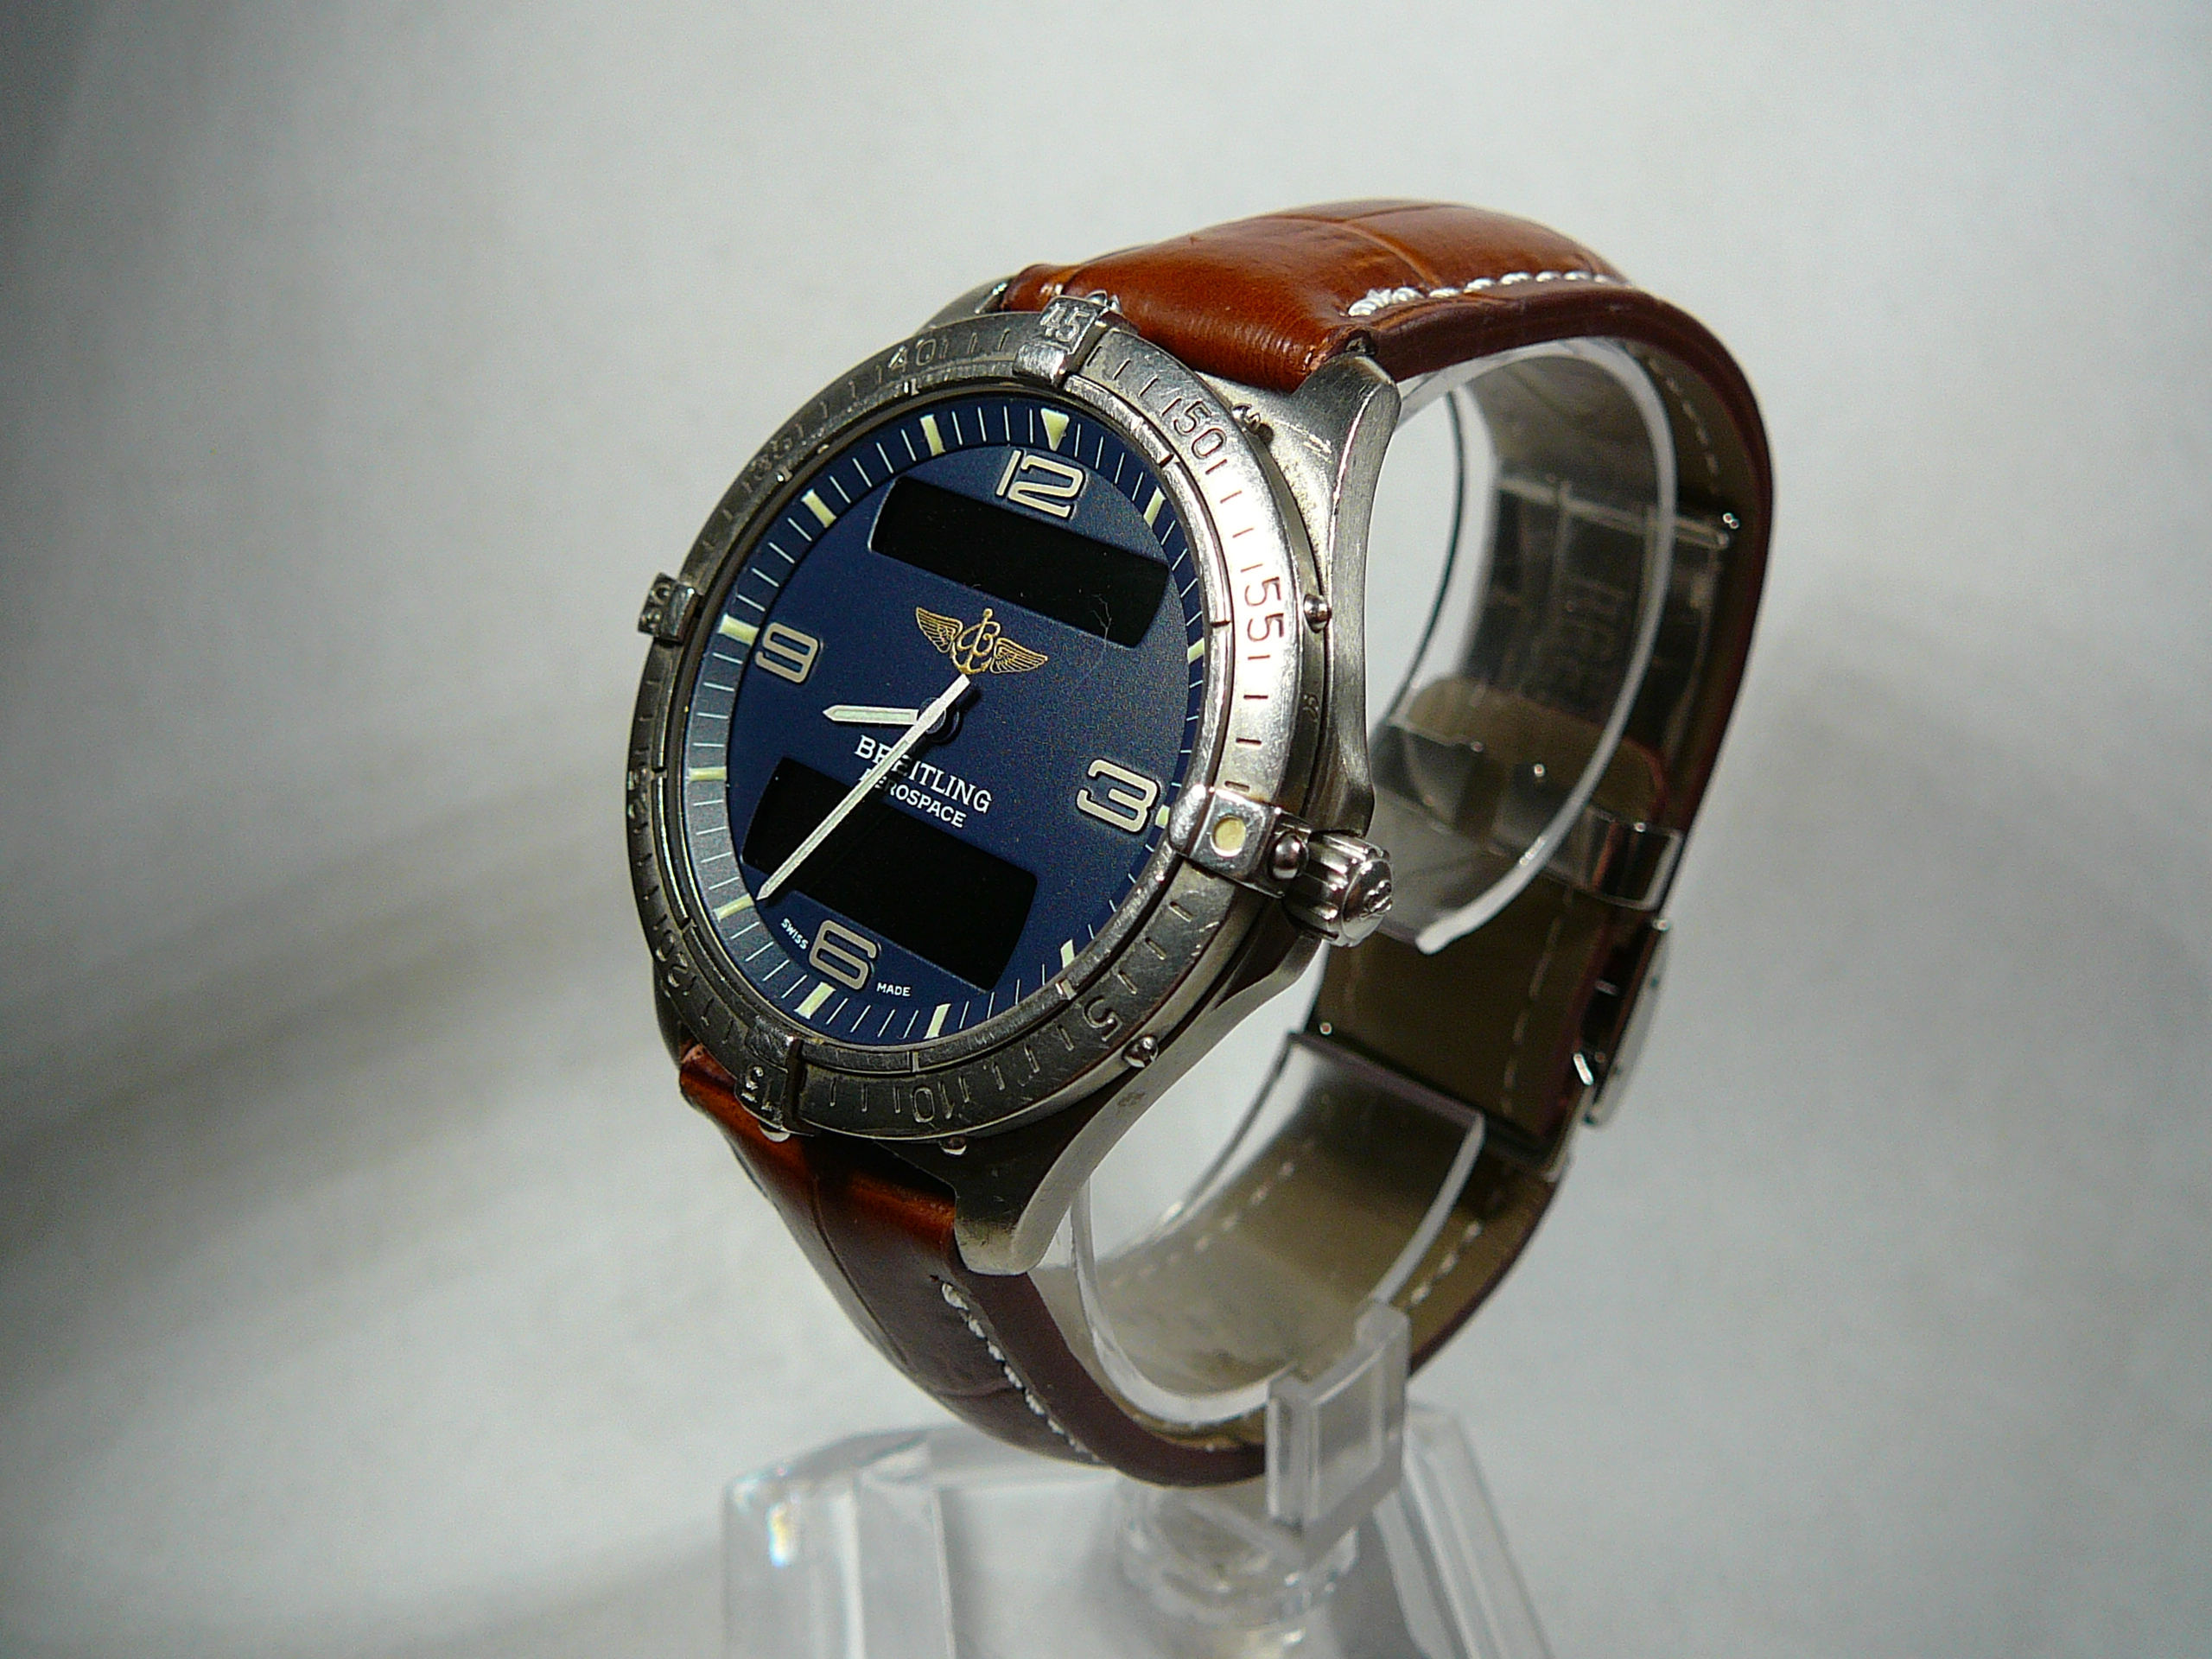 Gents Breitling Wrist Watch